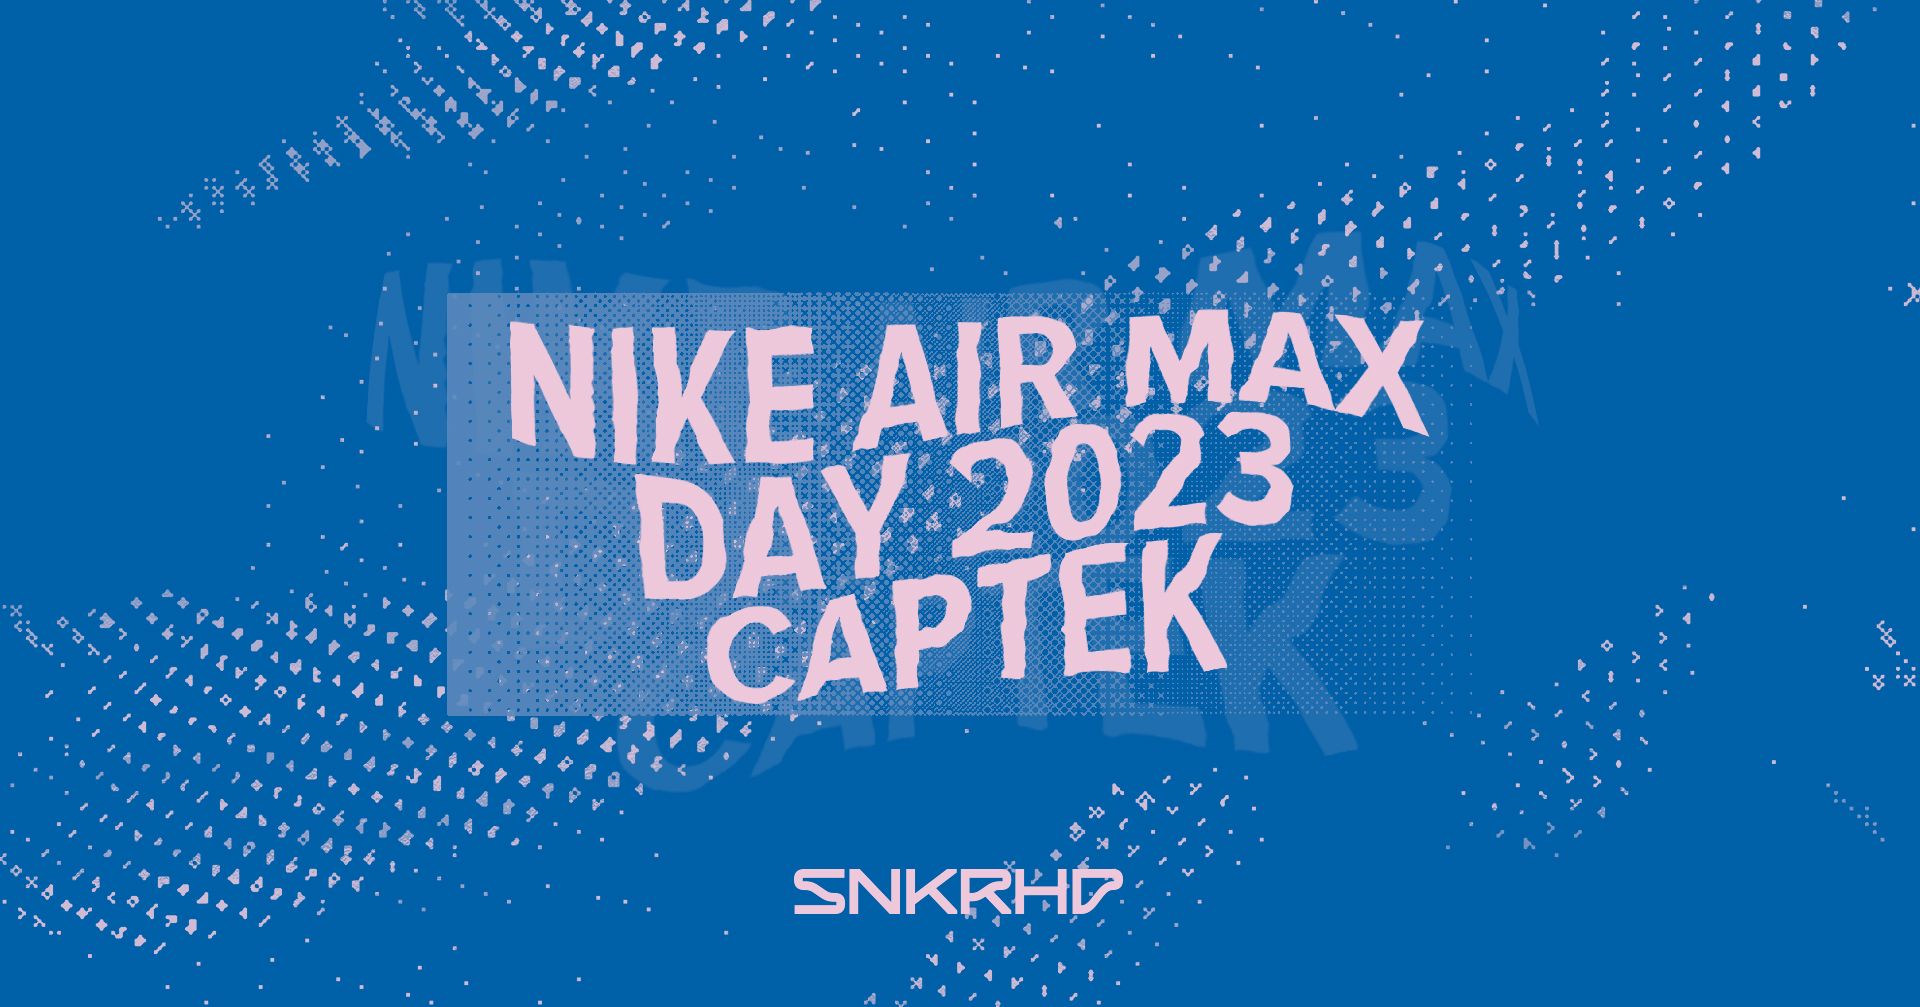 Профайл художника к Air Max Day 2023: Сартек